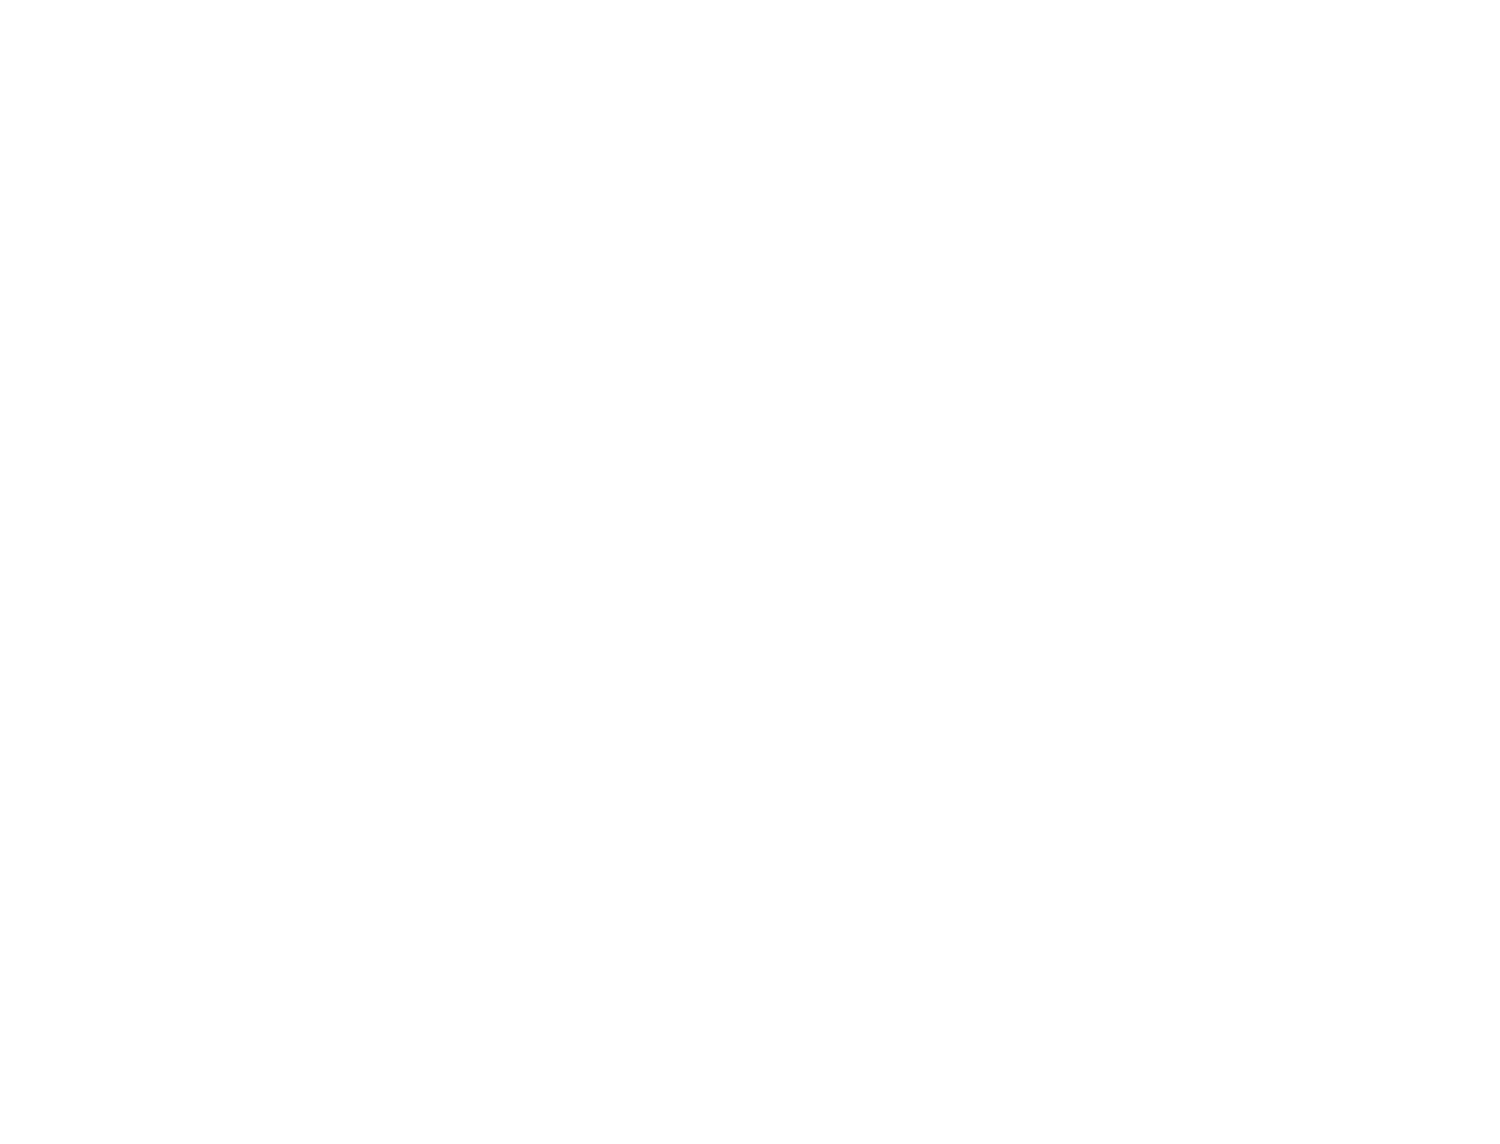 Savvy Snoot